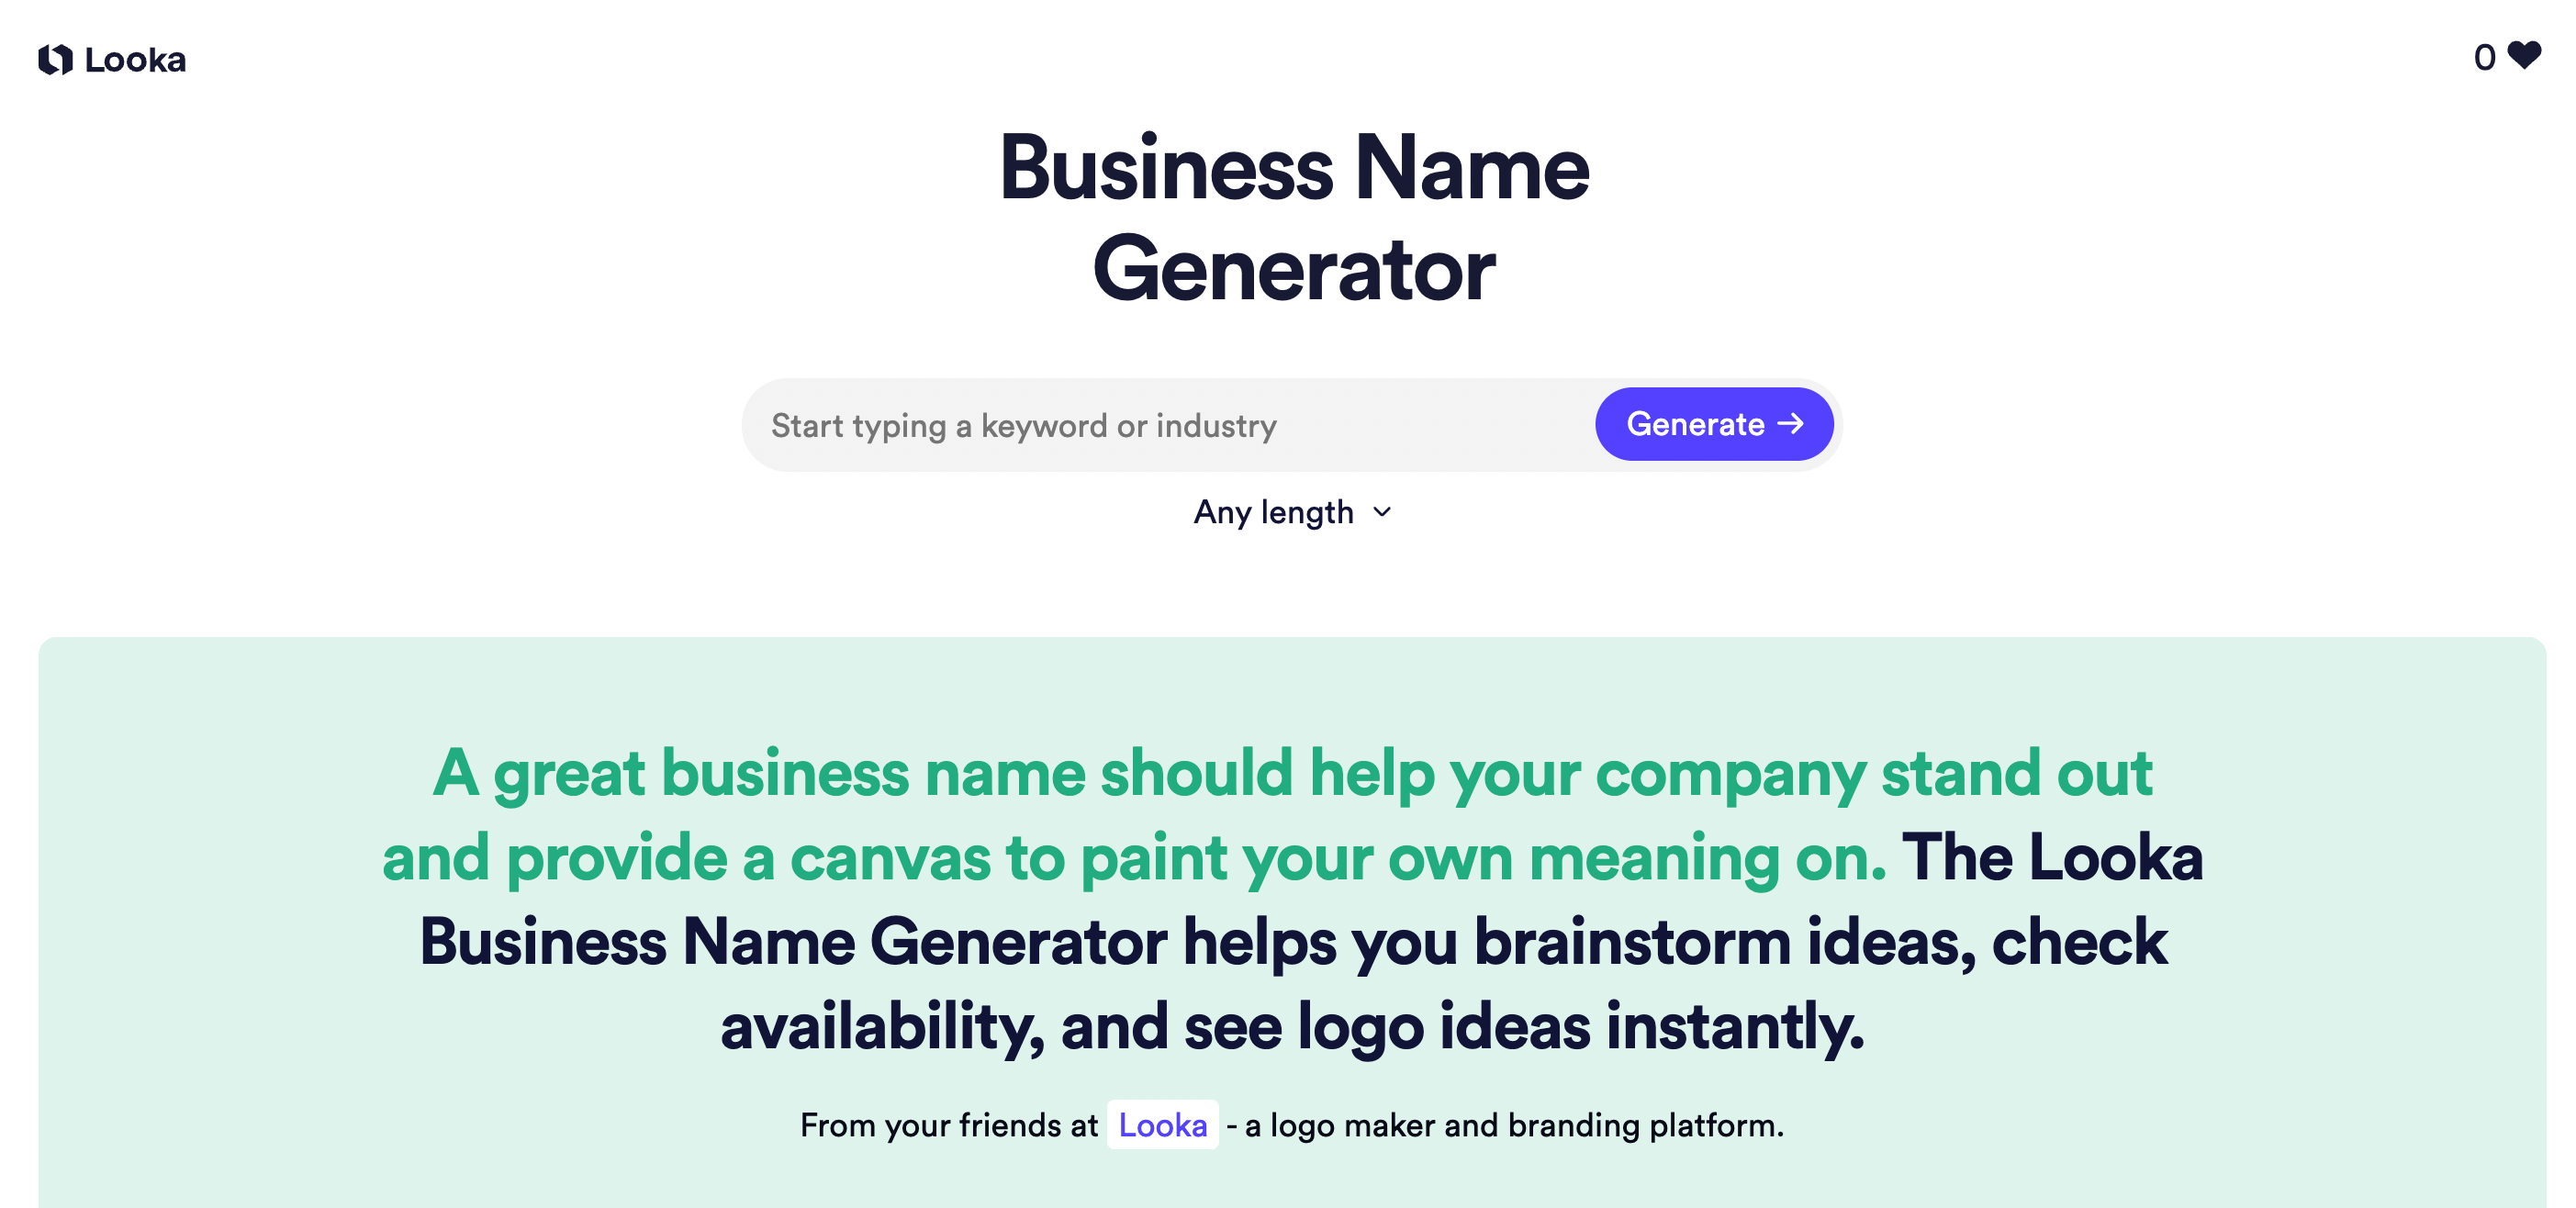 Looka's Business Name Generator (Tool Screenshot) for Finding a Name